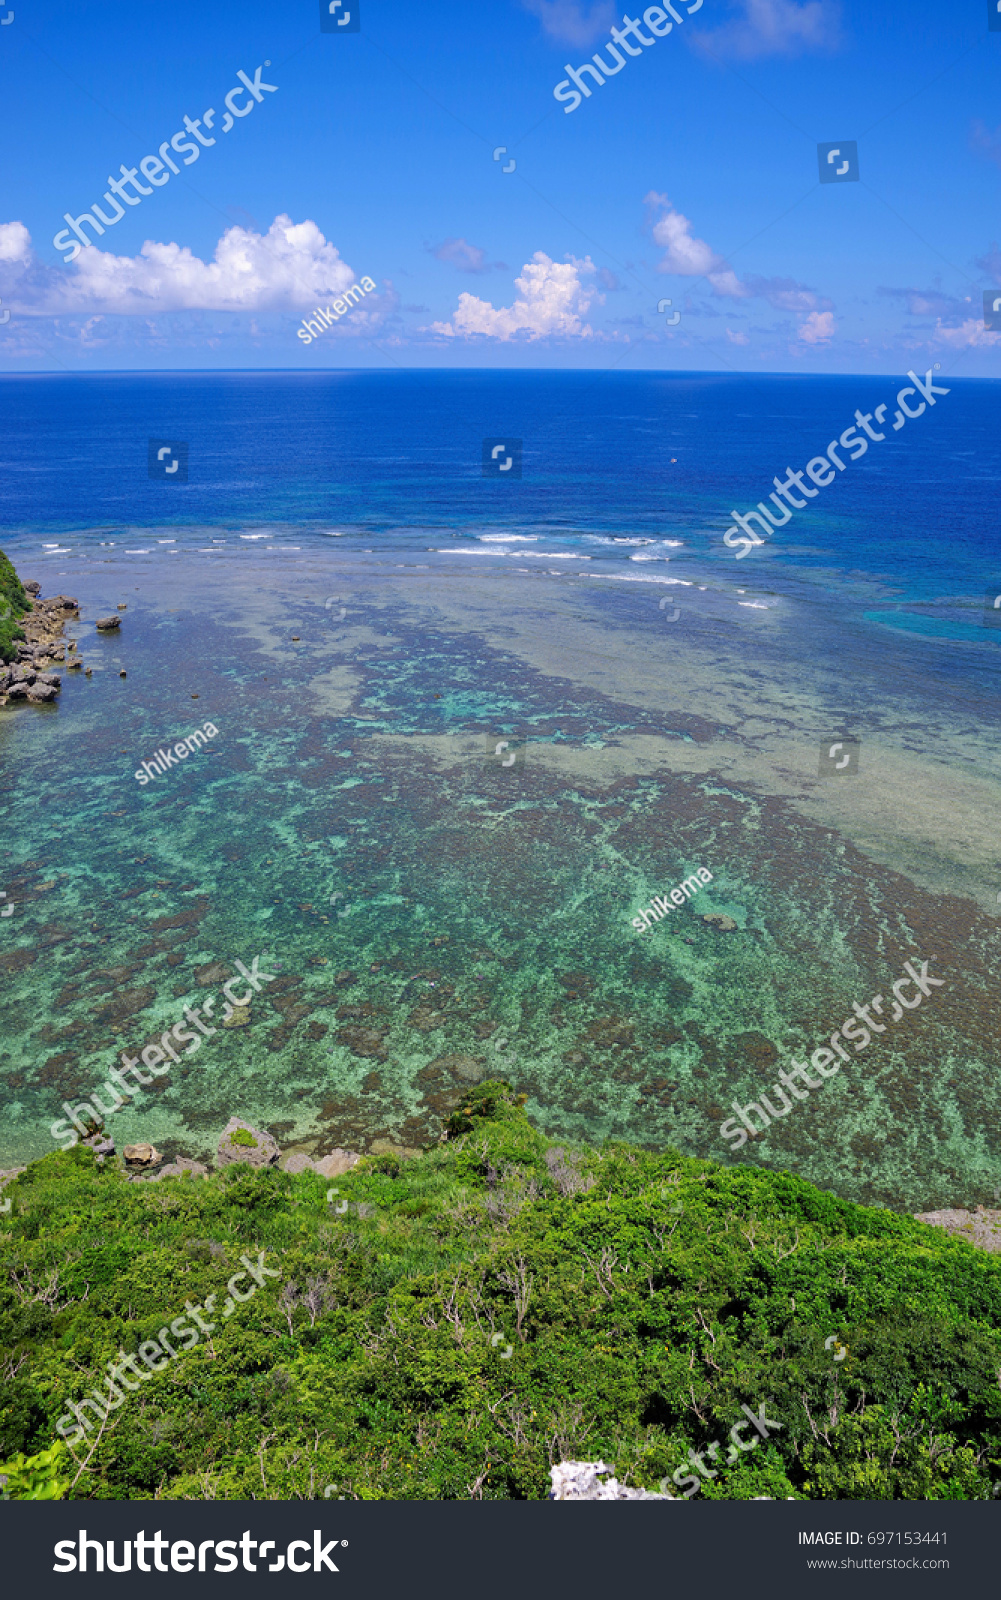 33 Miyagi jima 图片、库存照片和矢量图| Shutterstock